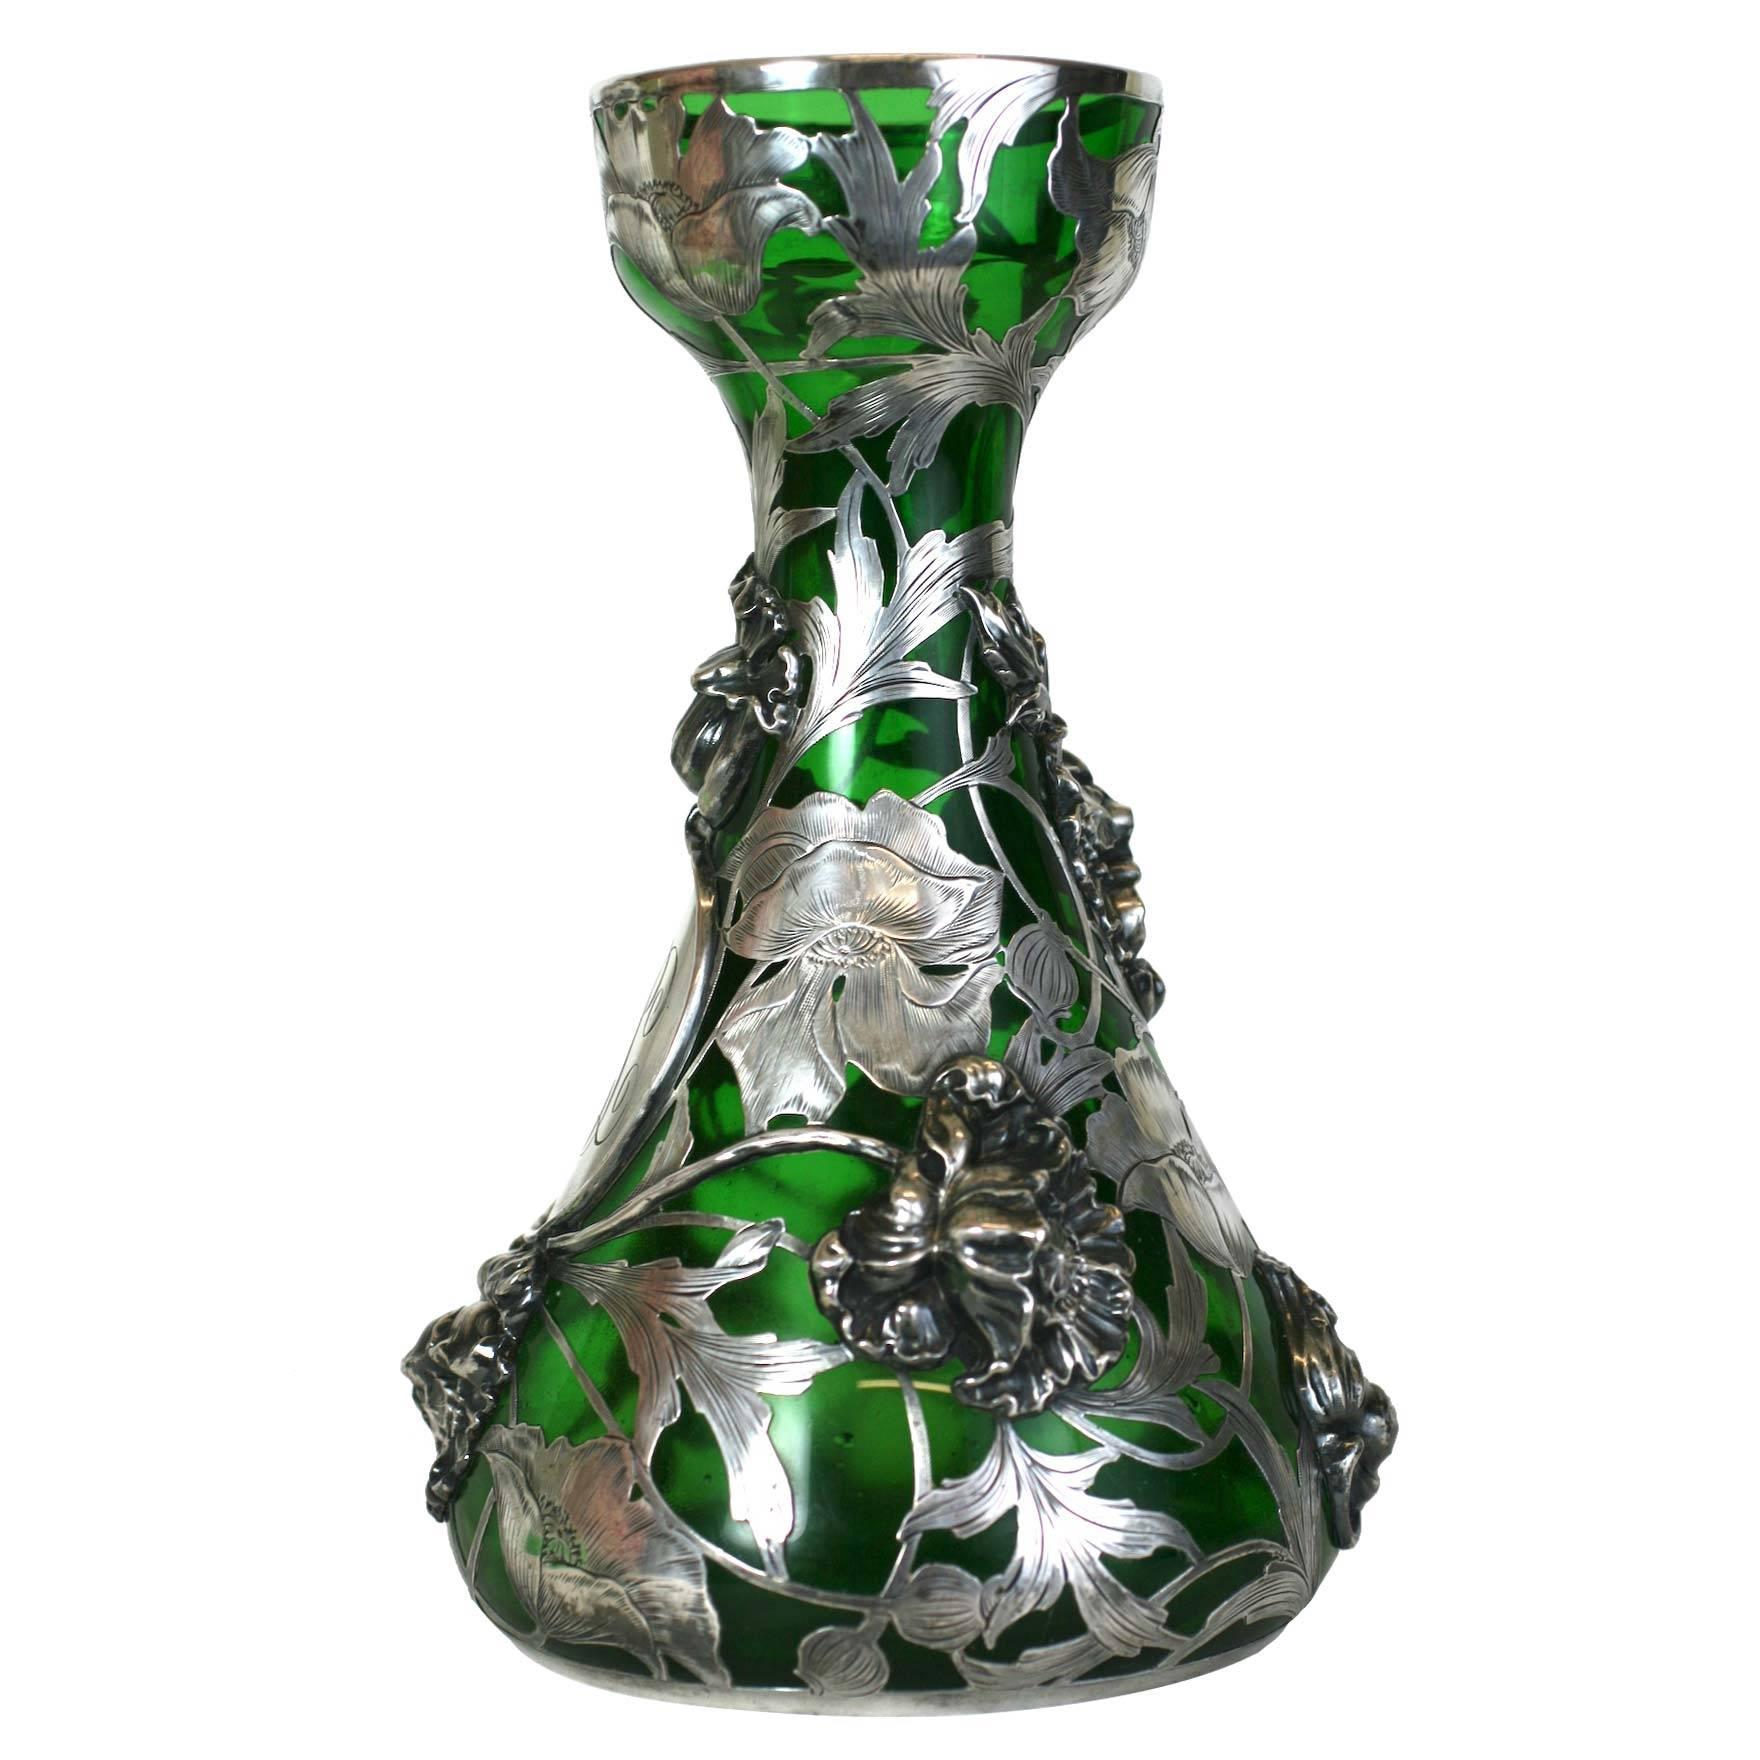 Exceptional Art Nouveau 3D Silver Overlay Vase, Alvin Mfg